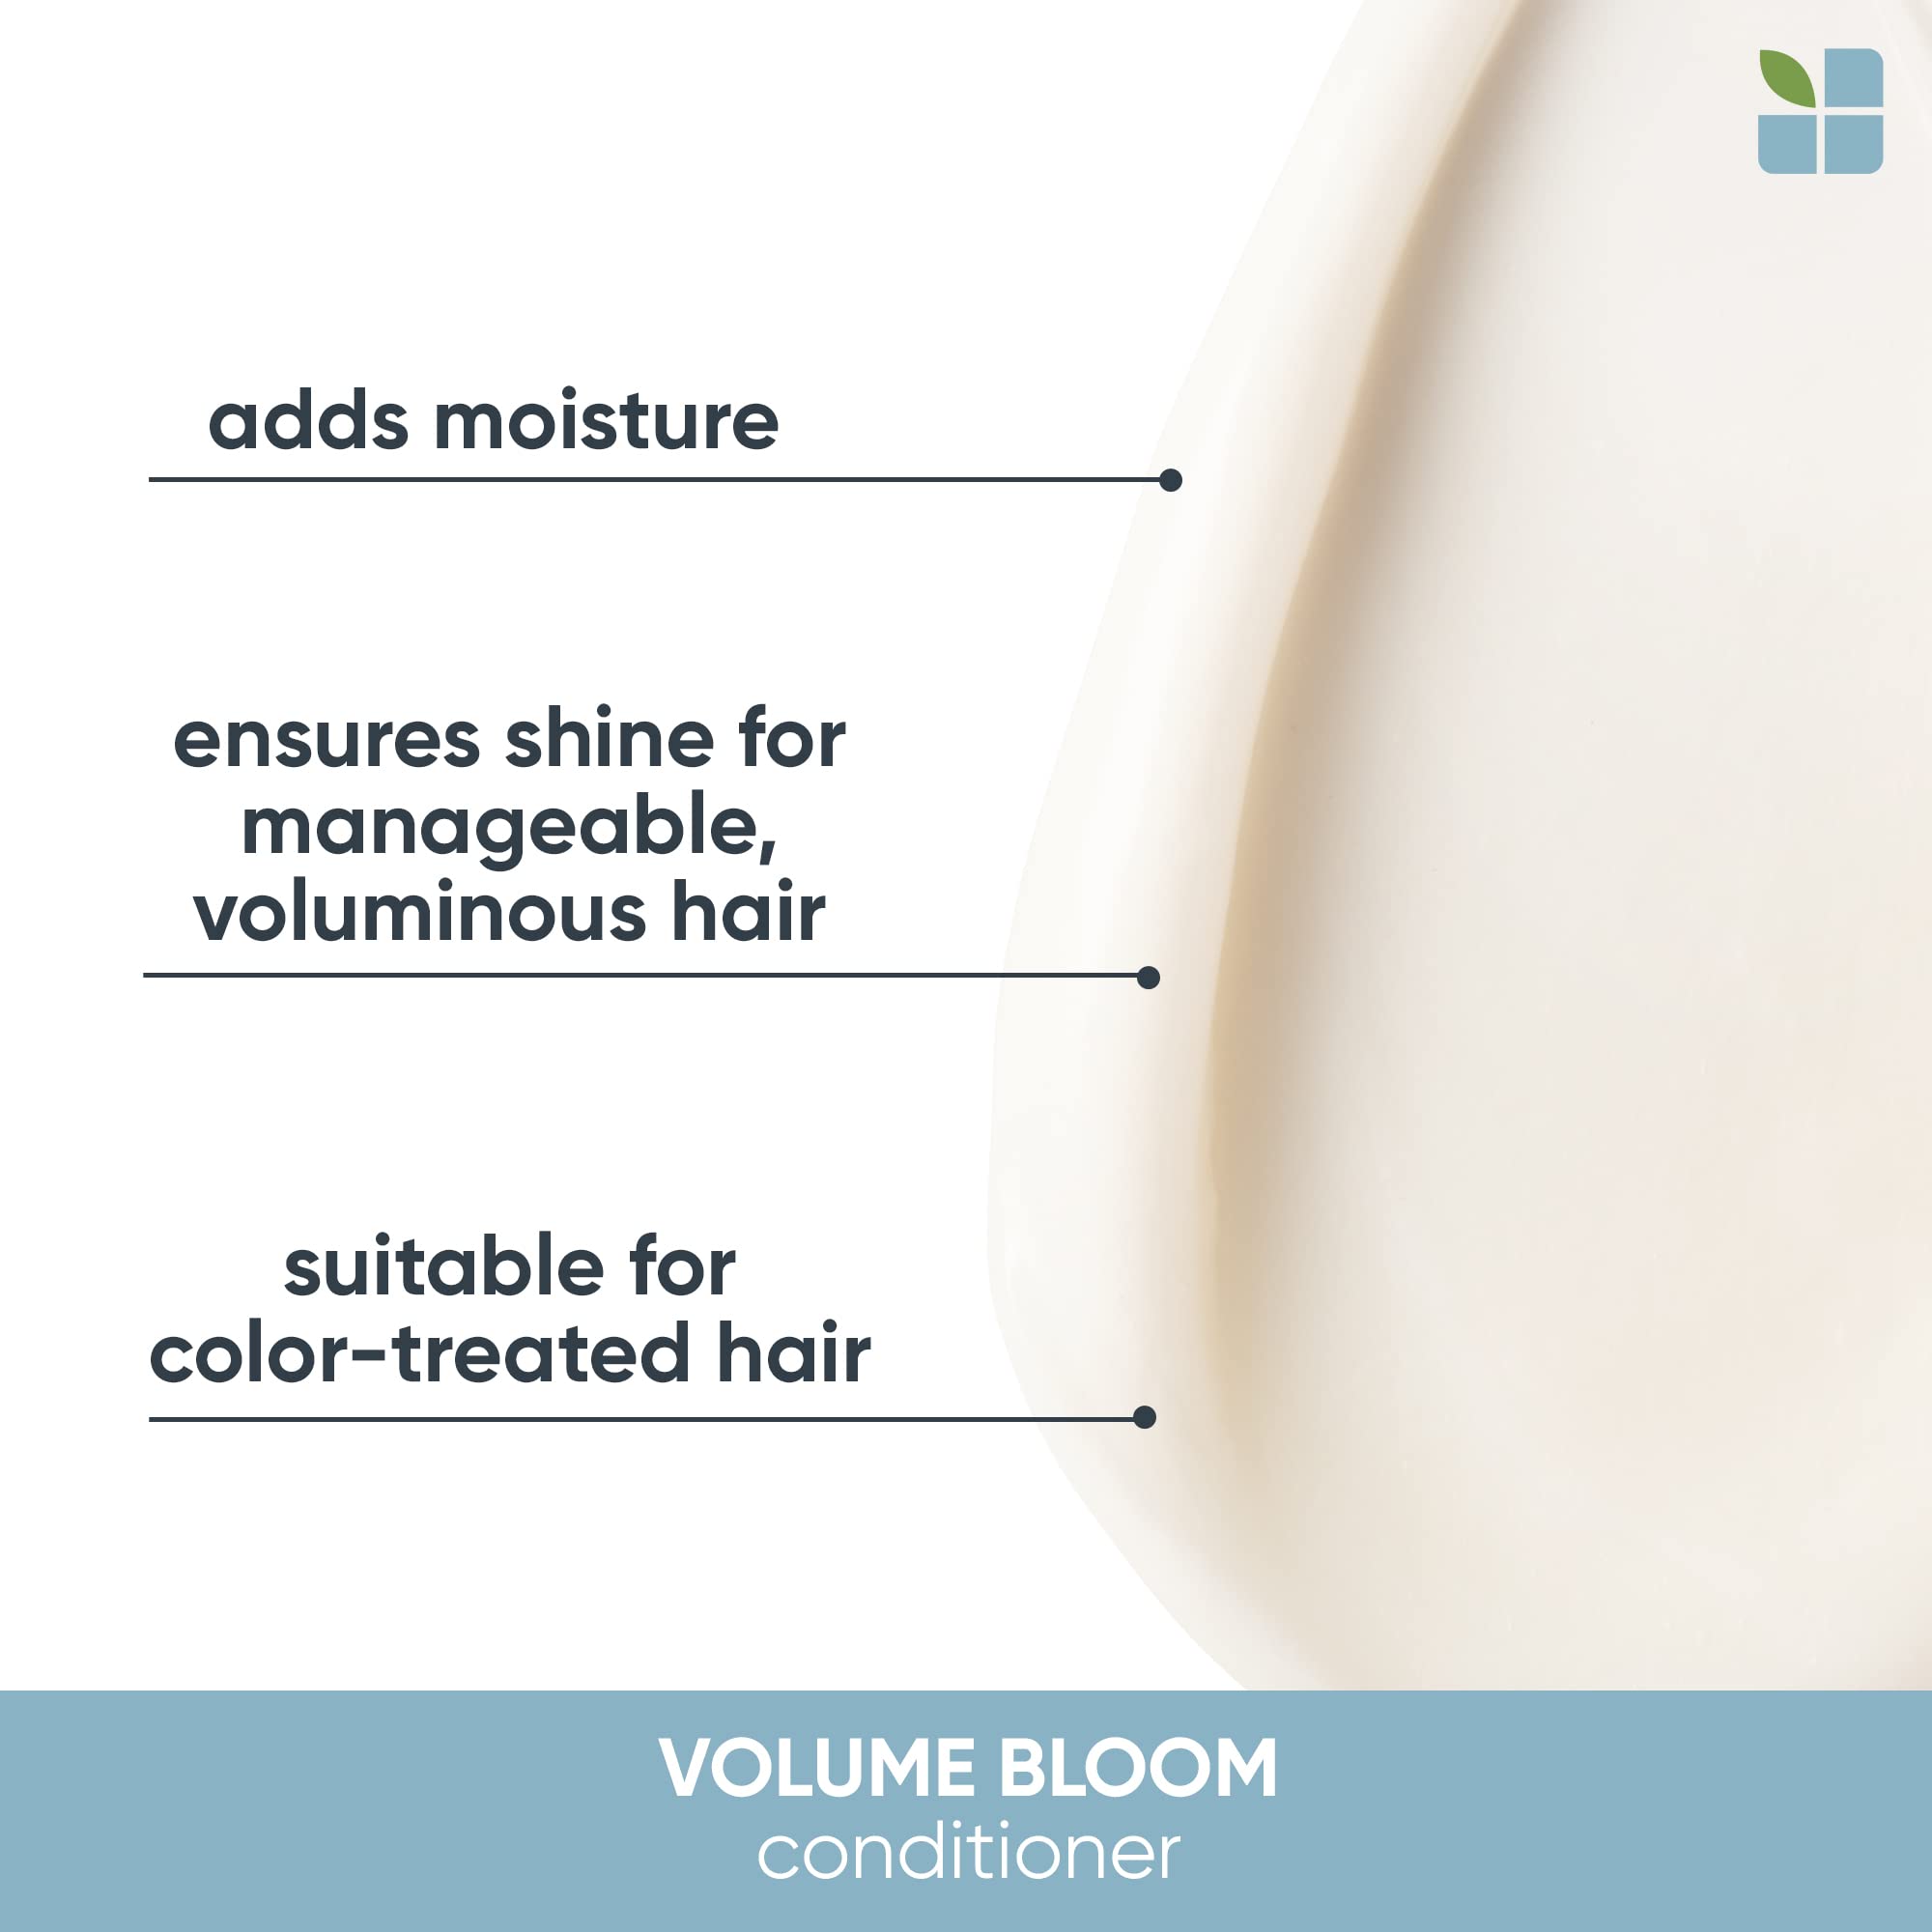 Biolage Volume Bloom Conditioner | Volumizing Conditioner | Weightless Moisture For Long-Lasting Voluminous Hair | For Fine Hair | Paraben & Silicone-Free | Vegan | Cruelty Free